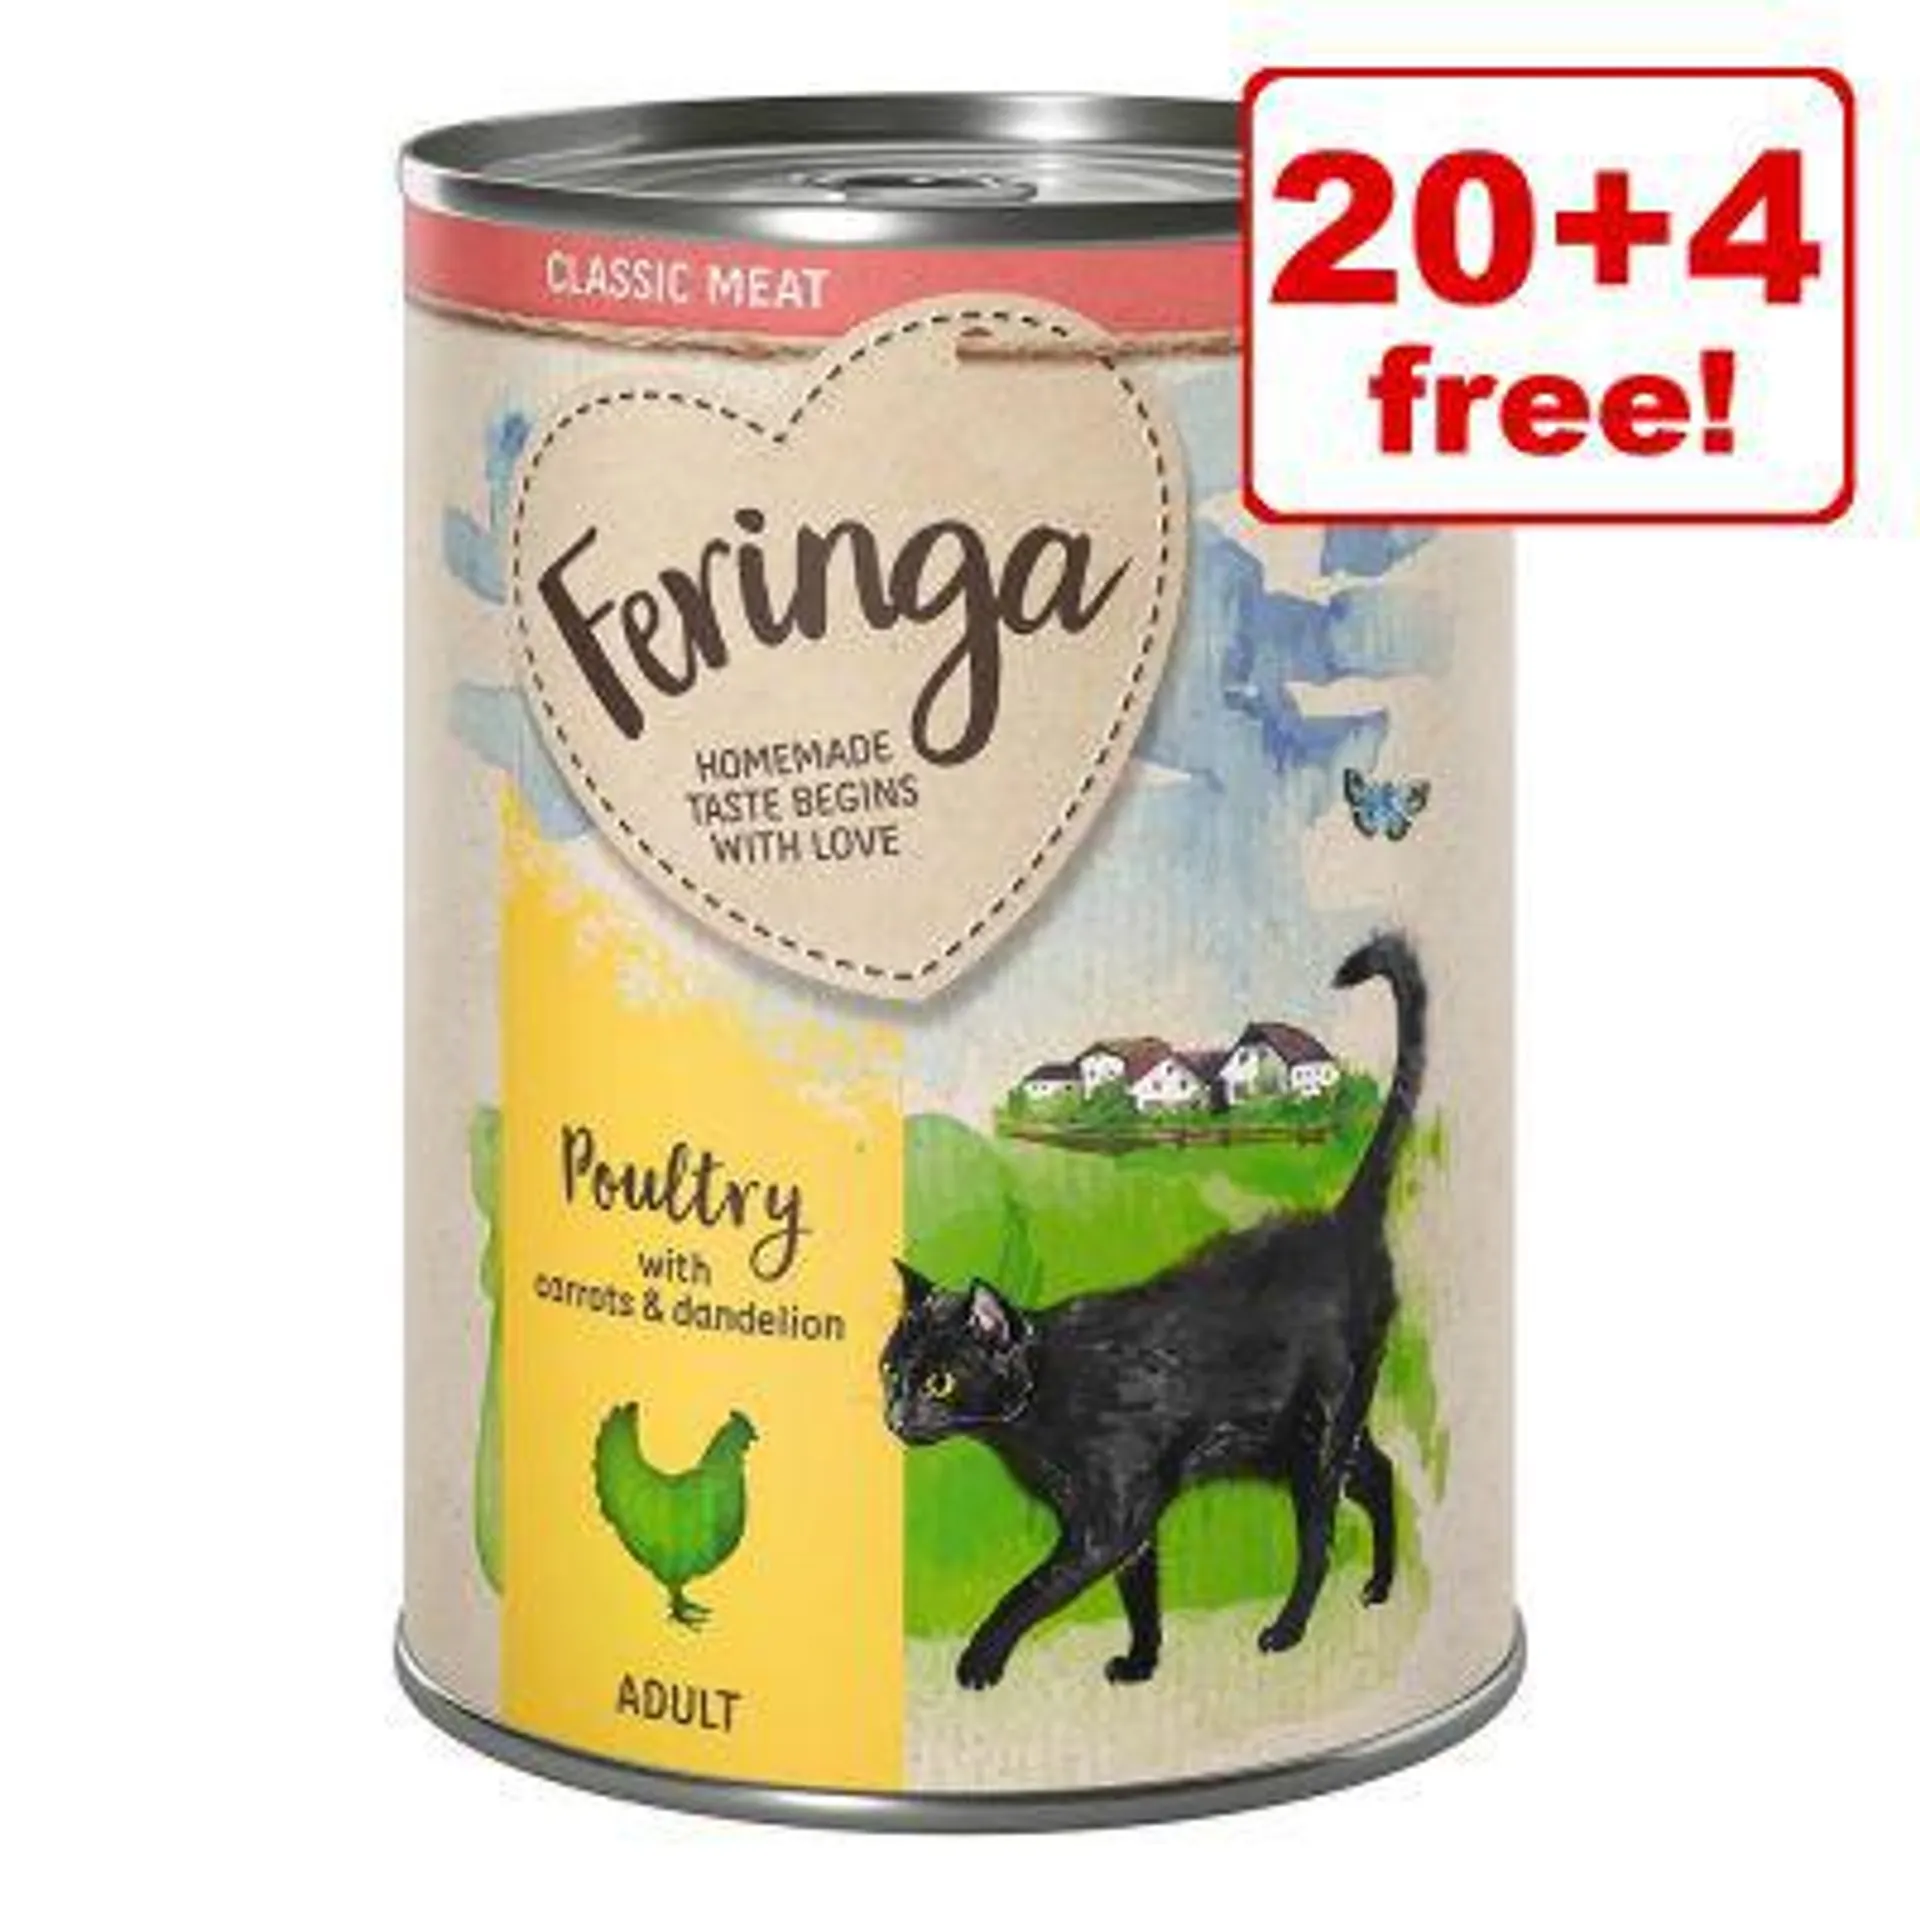 24 x 400g Feringa Classic Meat Menu Wet Cat Food - 20 + 4 Free!*